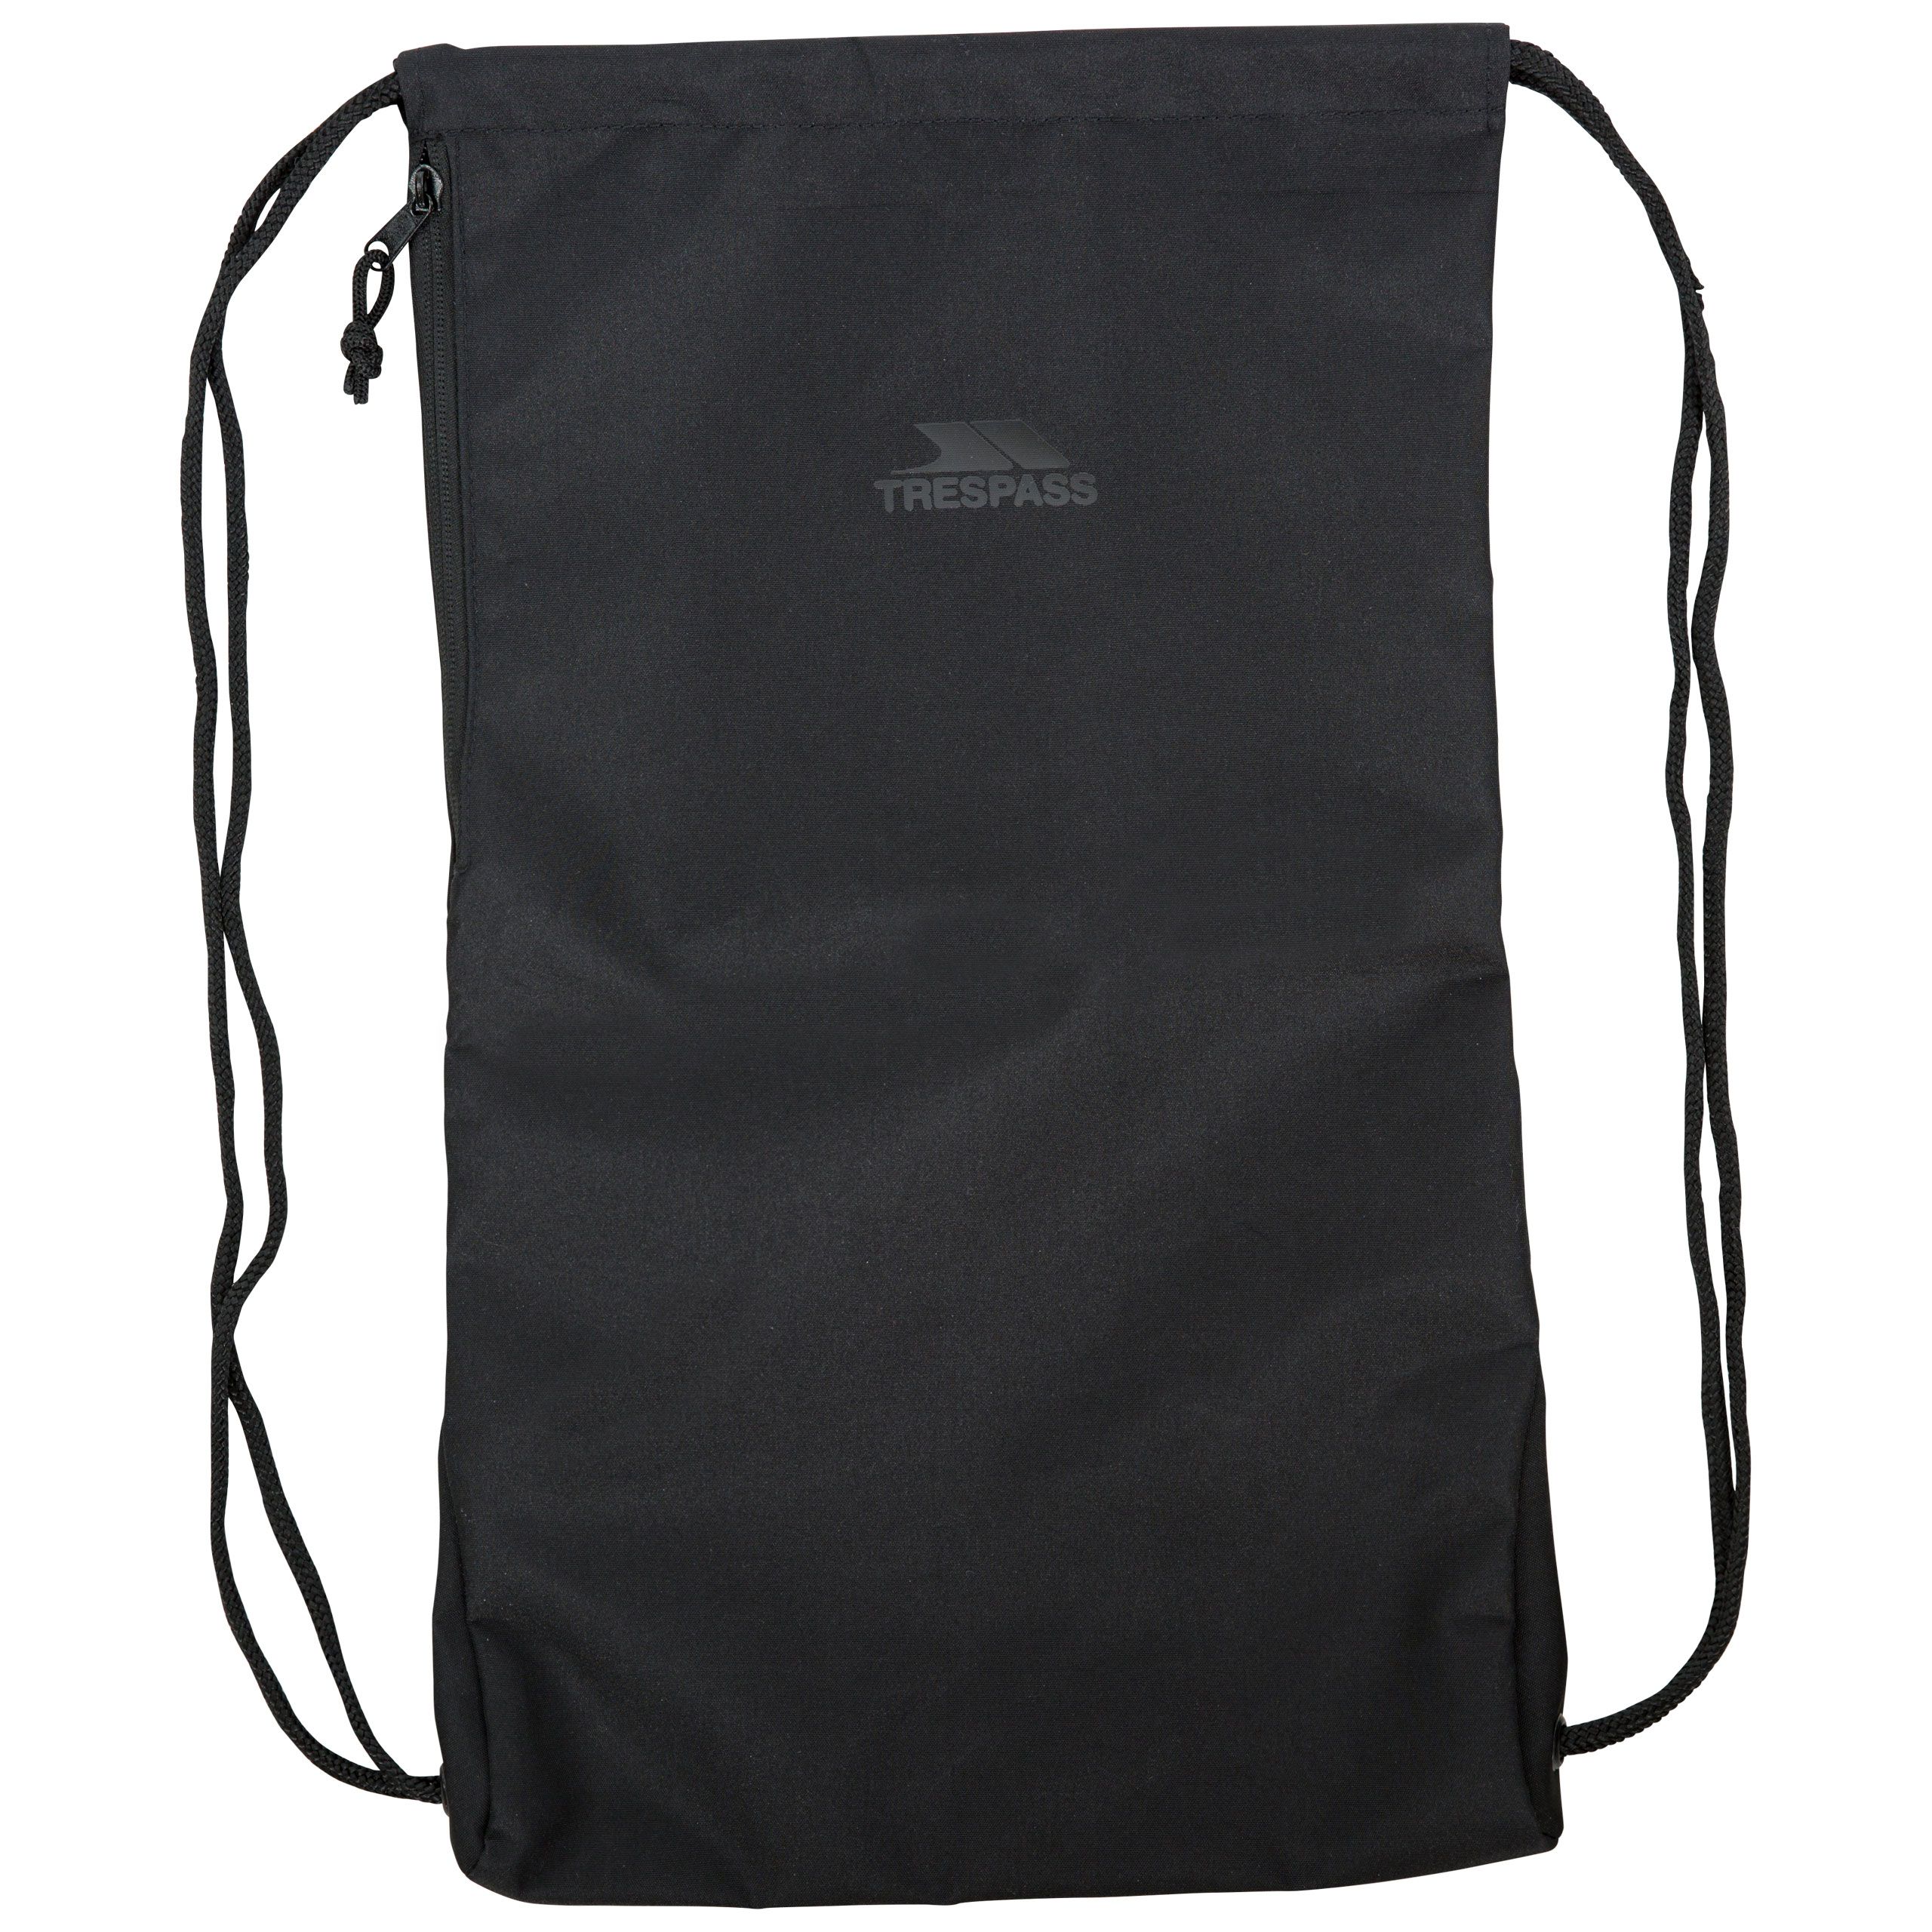 Trespass Drawstring Bag Black With Side Pocket Stape